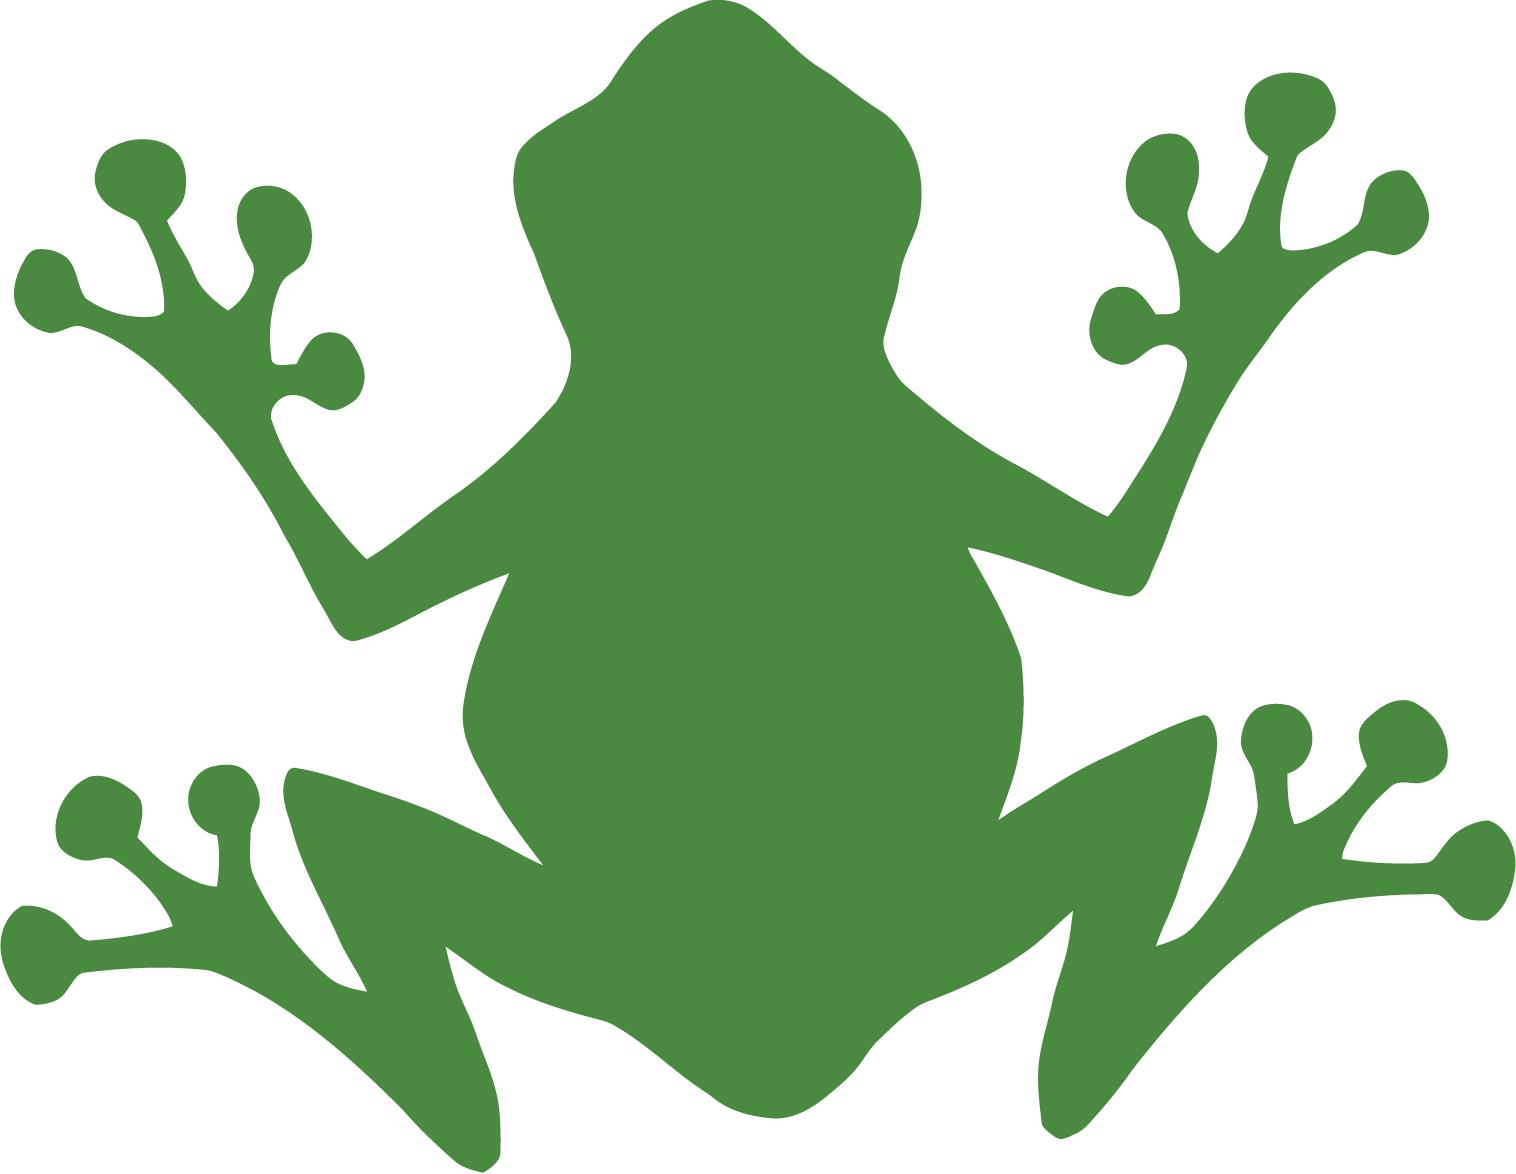 Cartoon Jumping Frog | Clipart Panda - Free Clipart Images